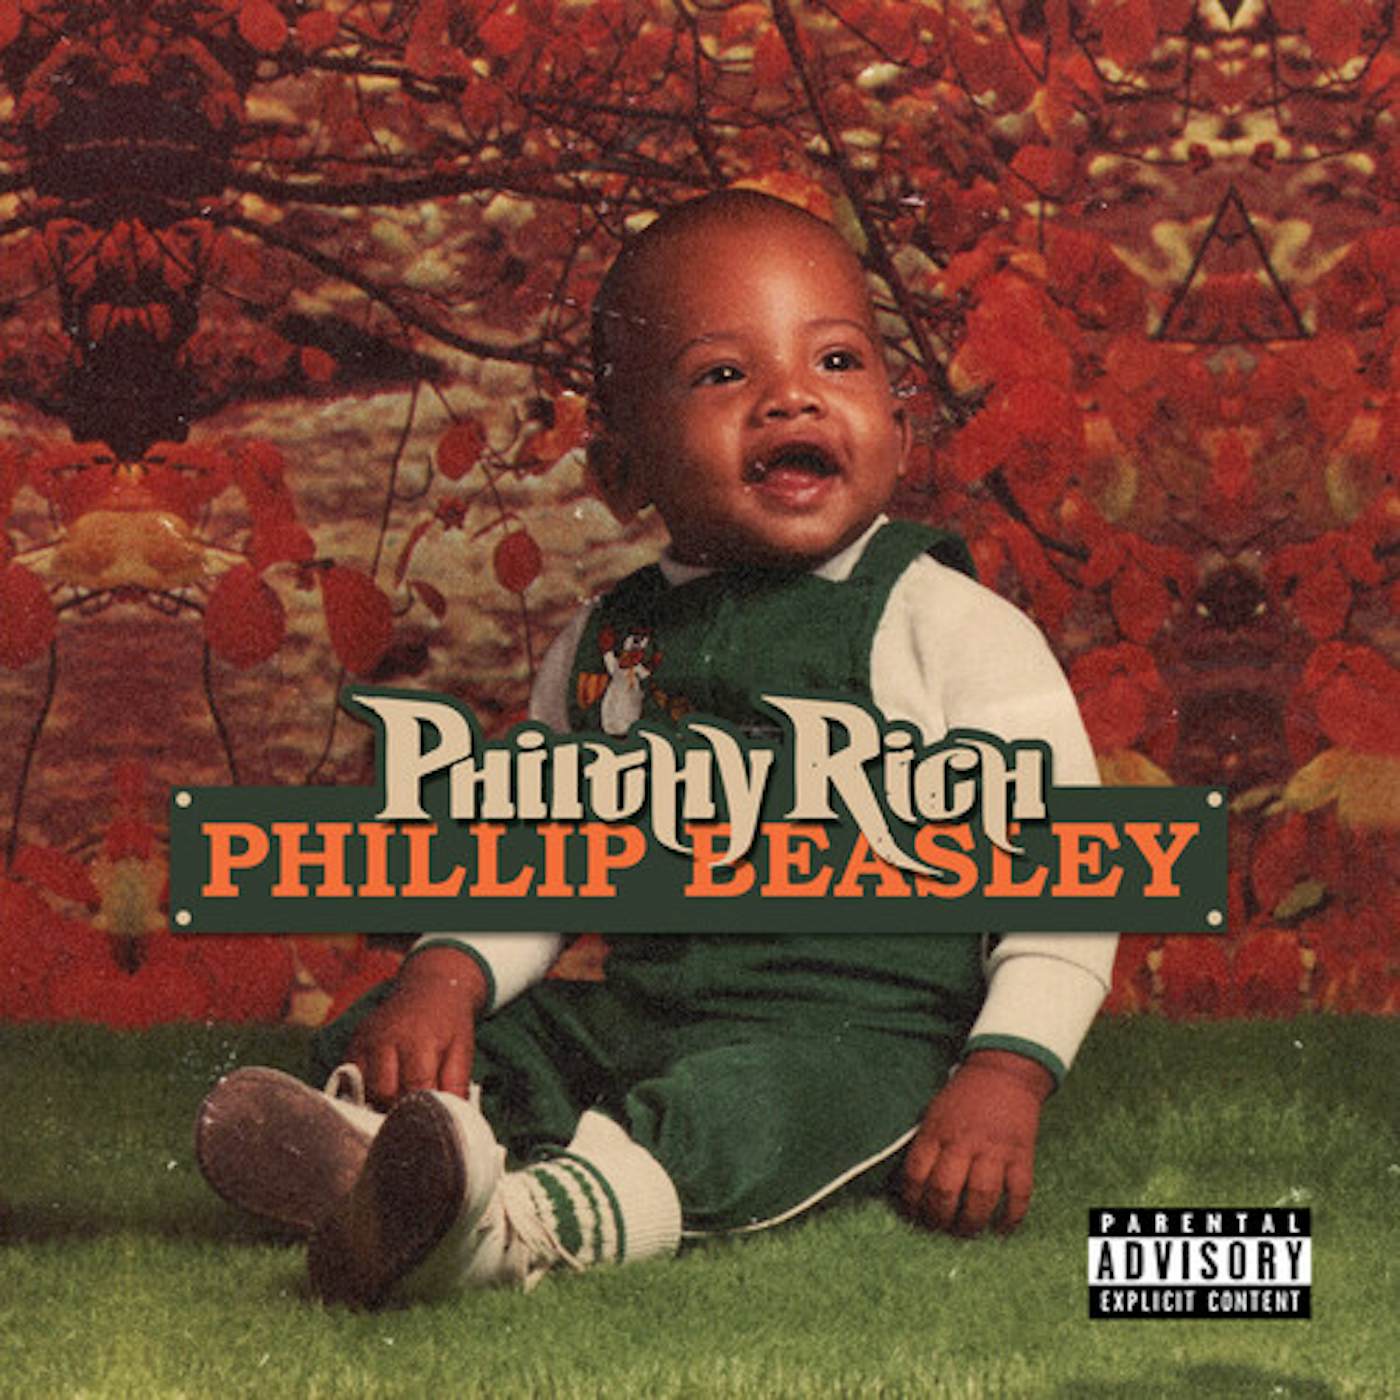 Philthy Rich PHILLIP BEASLEY CD